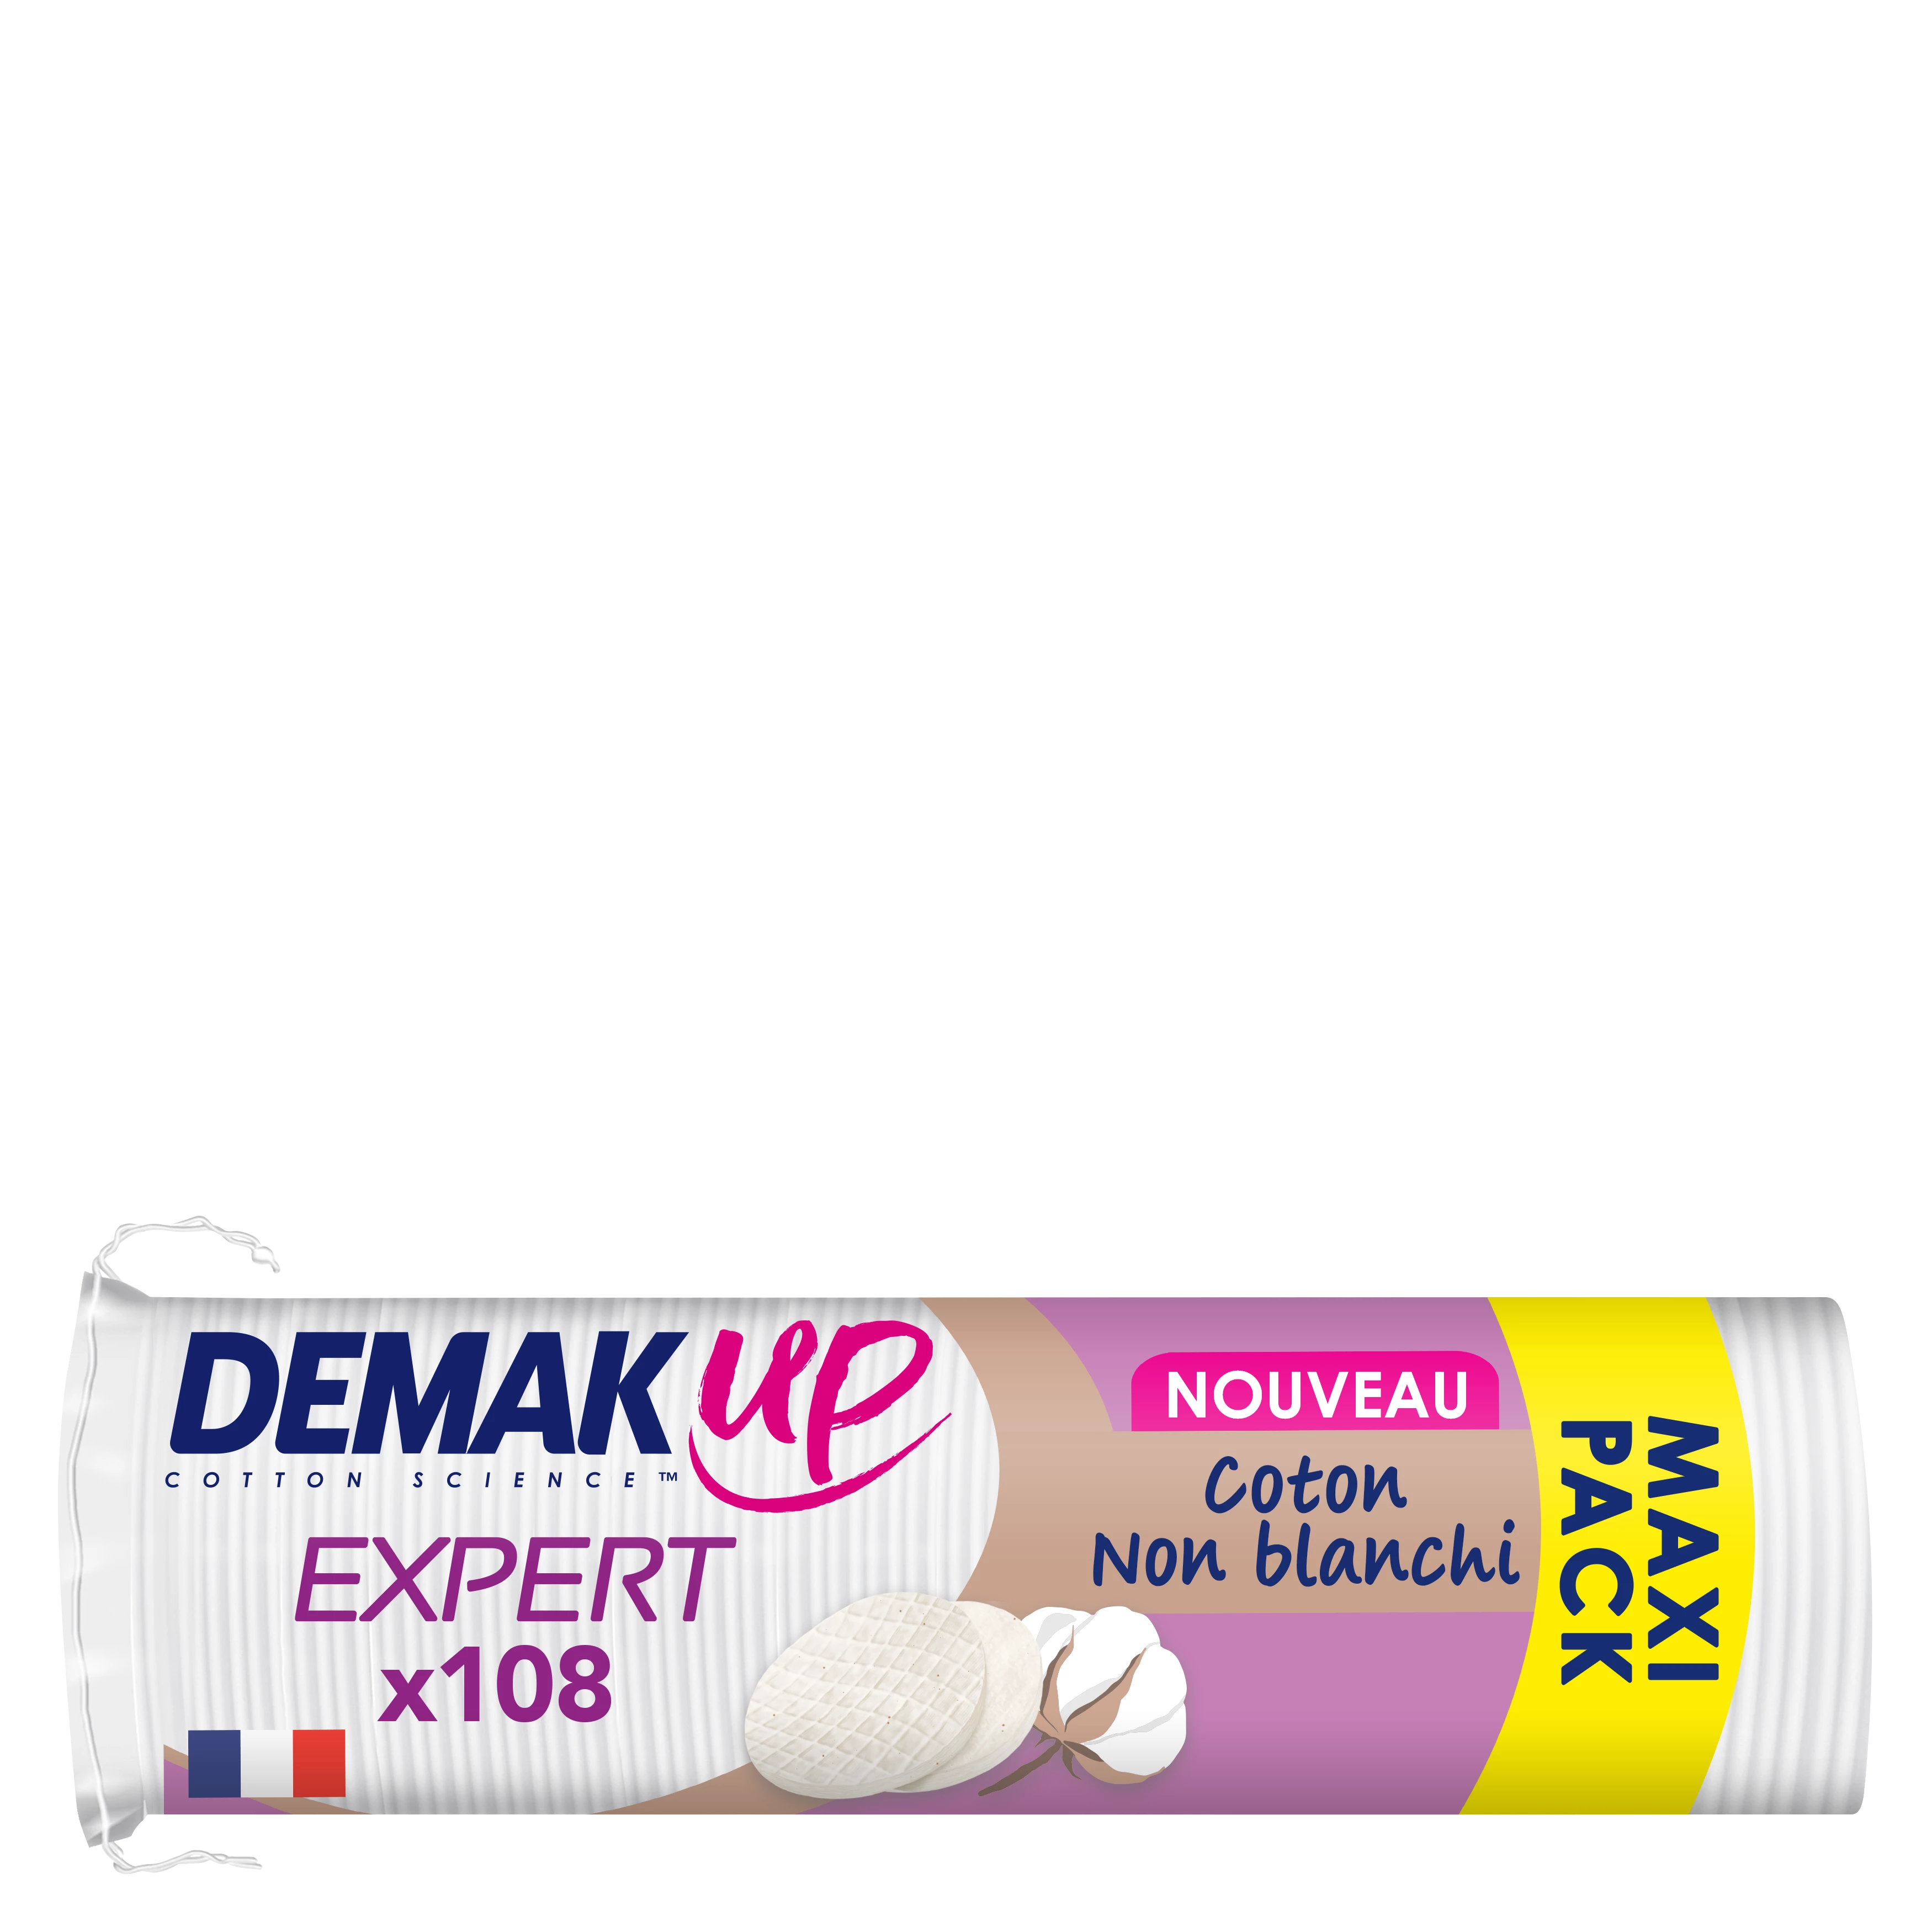 Disco removedor de maquiagem Demakup Expert X108